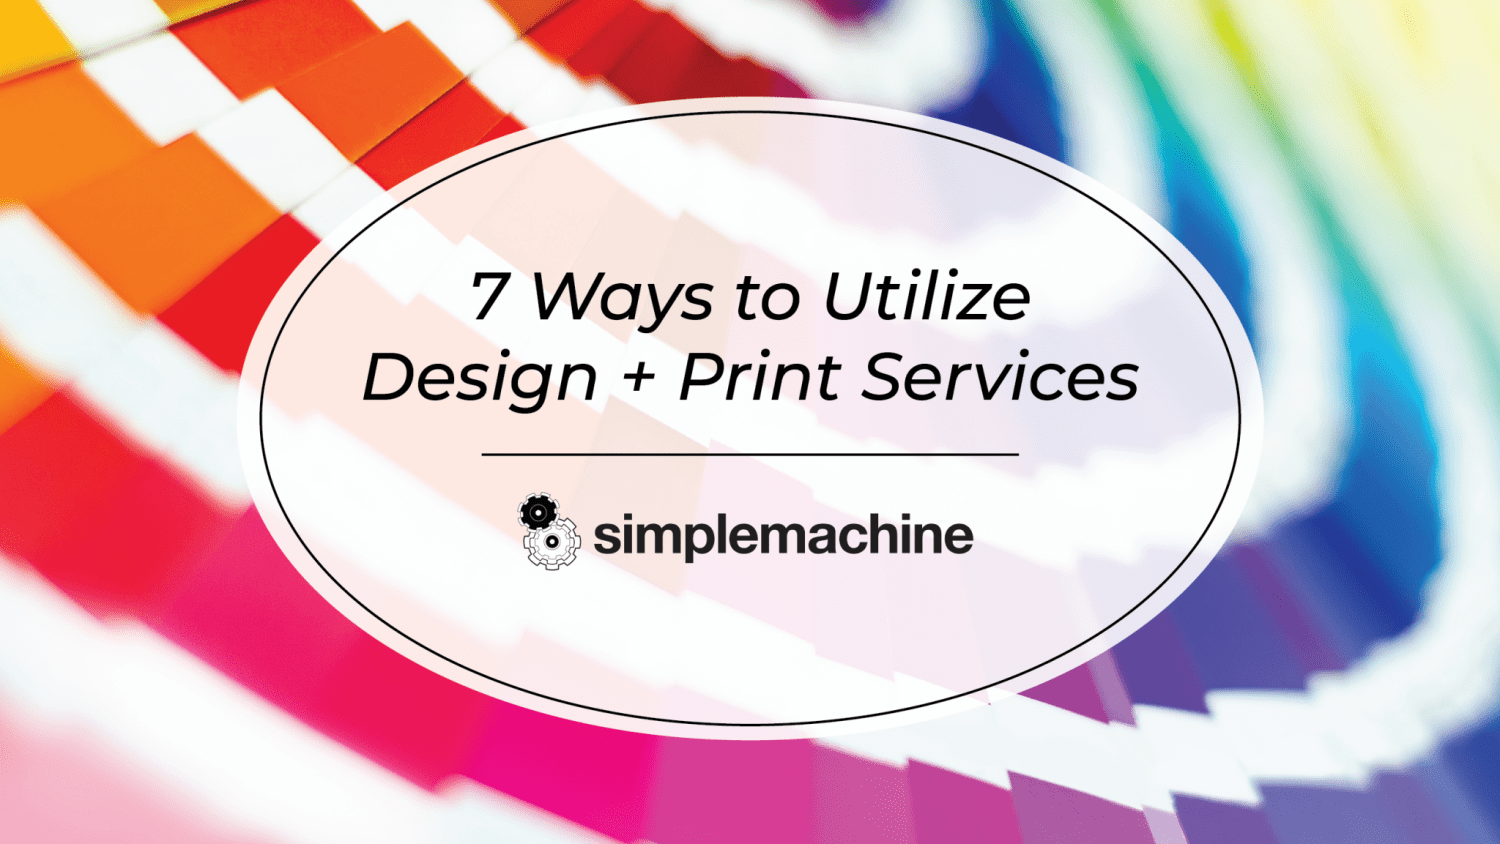 Design + Print | Graphic Design Services